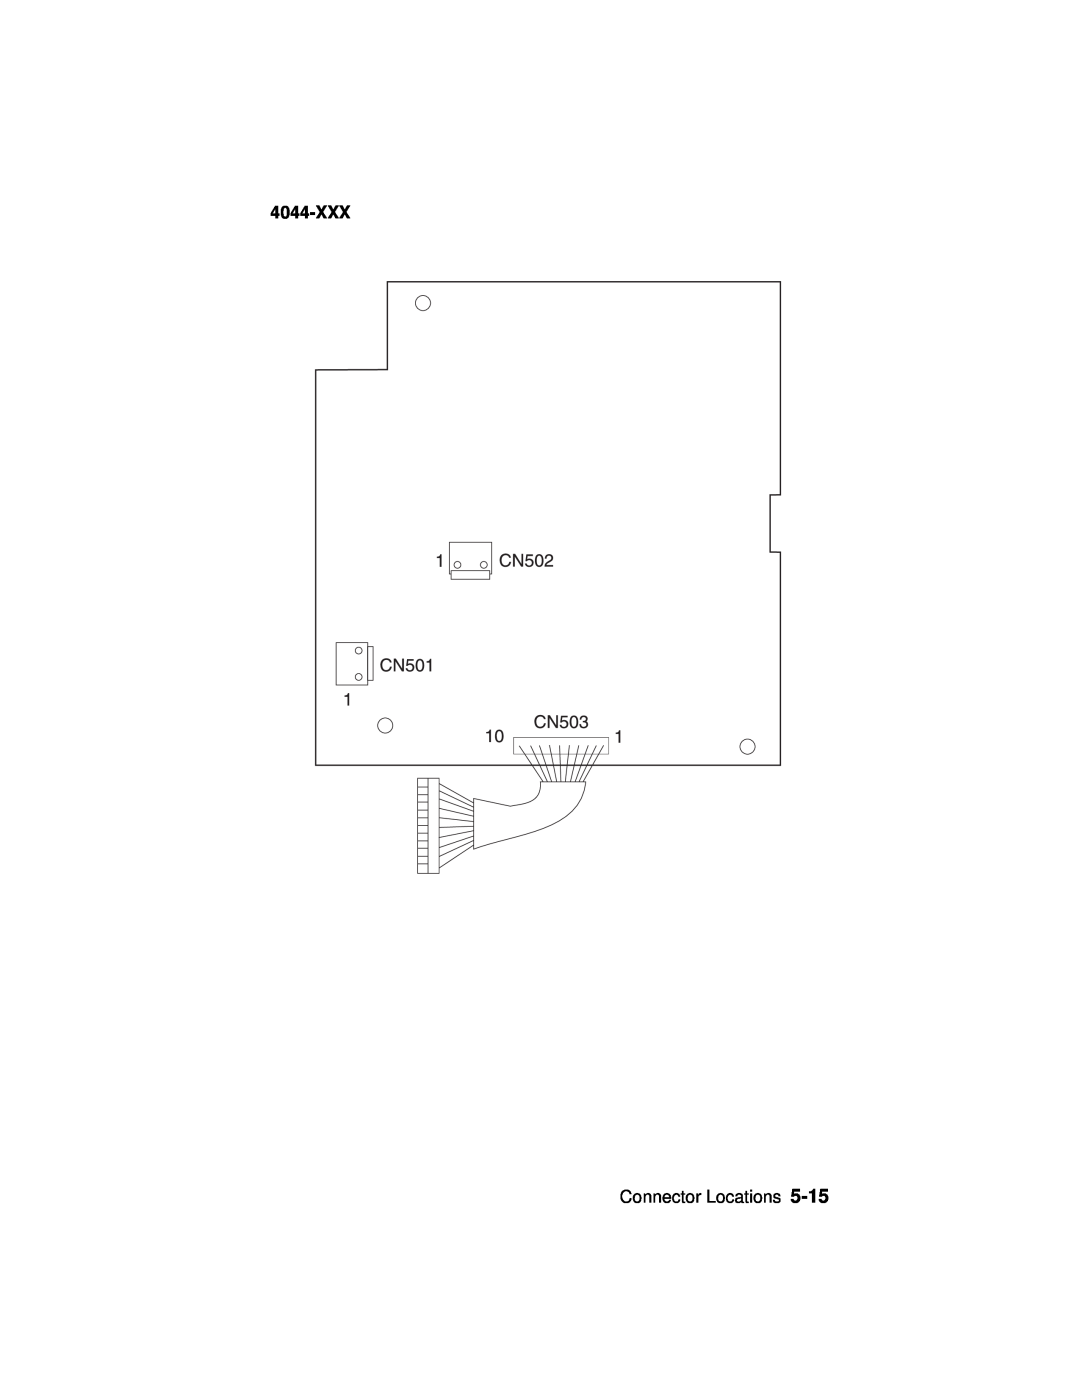 Lexmark E310 manual 4044-XXX, Connector Locations 